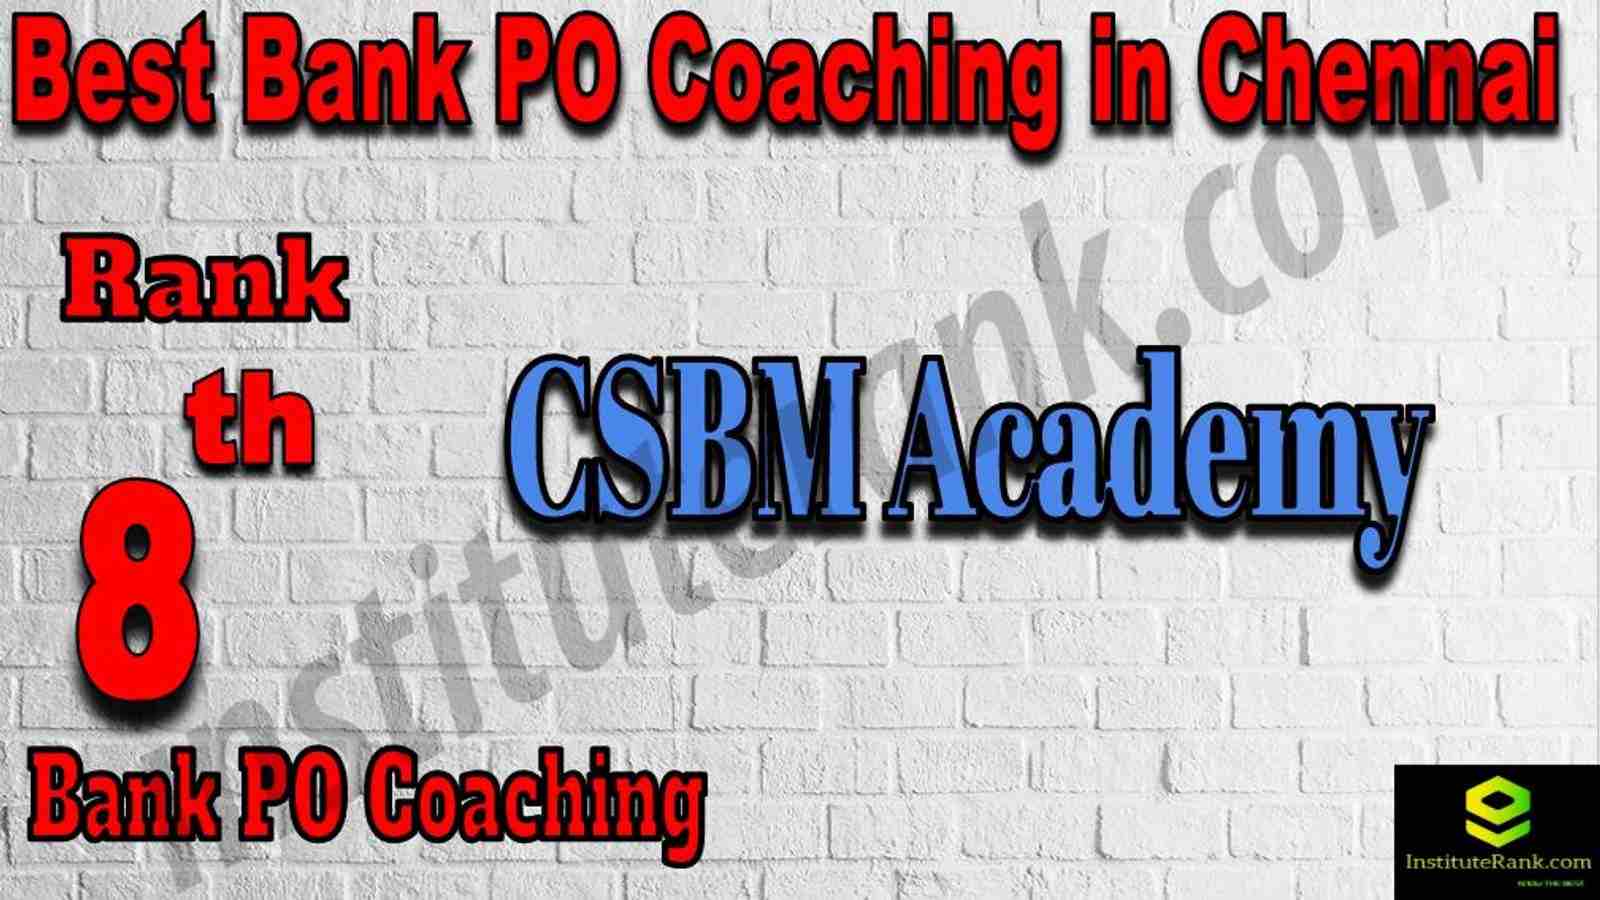 8th Best Bank PO Coaching in Chennai